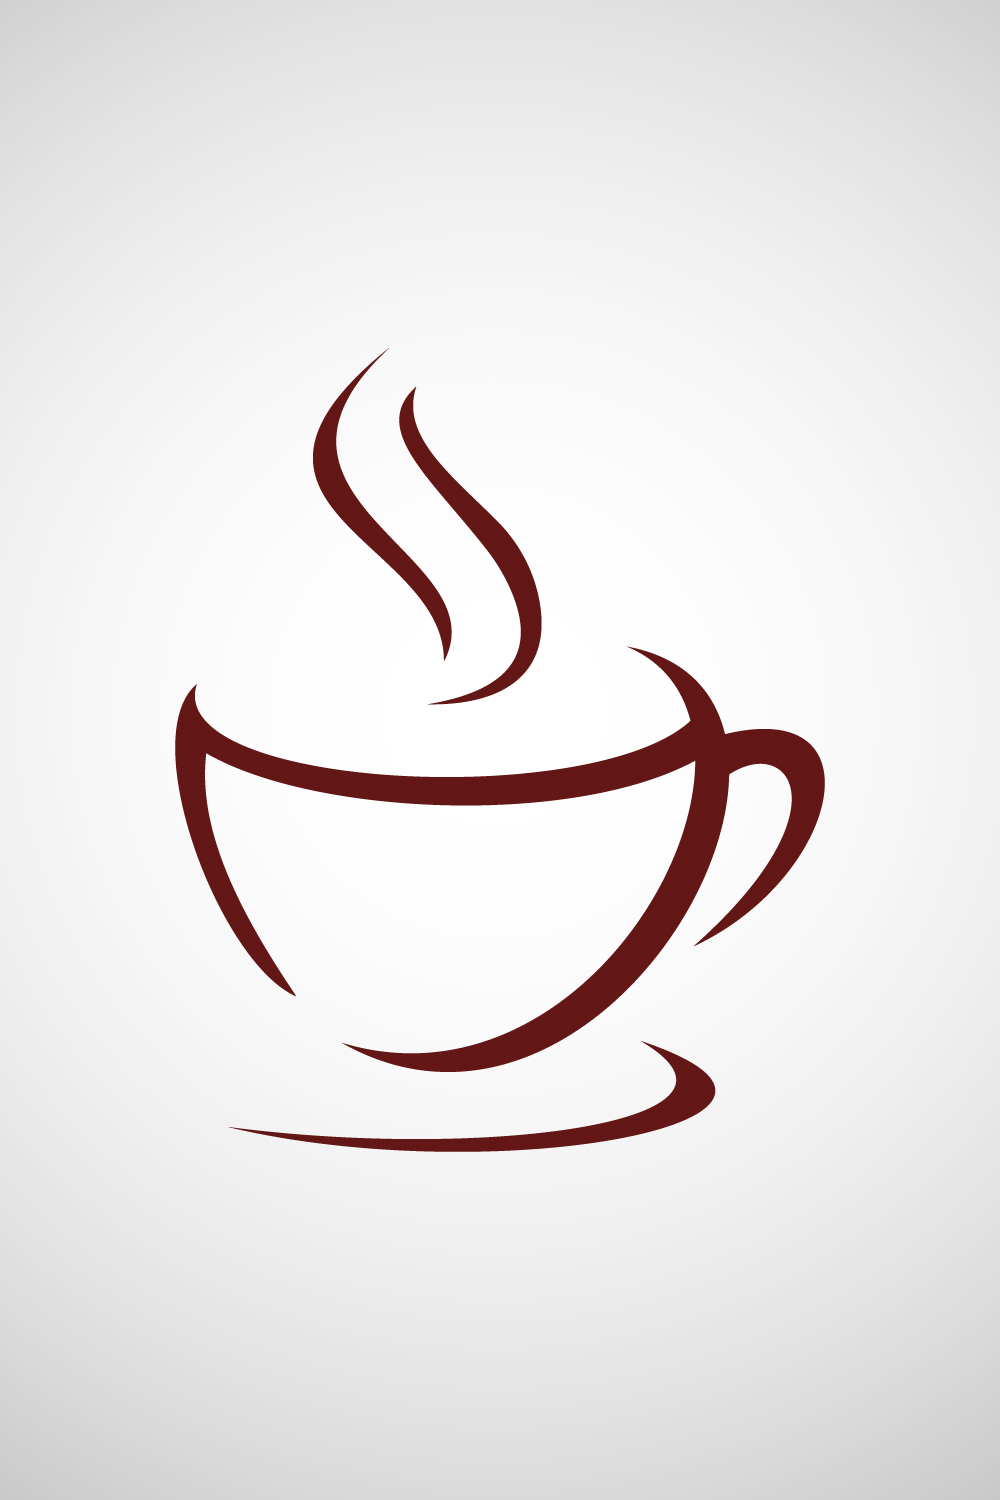 Coffee shop and restaurant logo design, Vector illustration pinterest preview image.